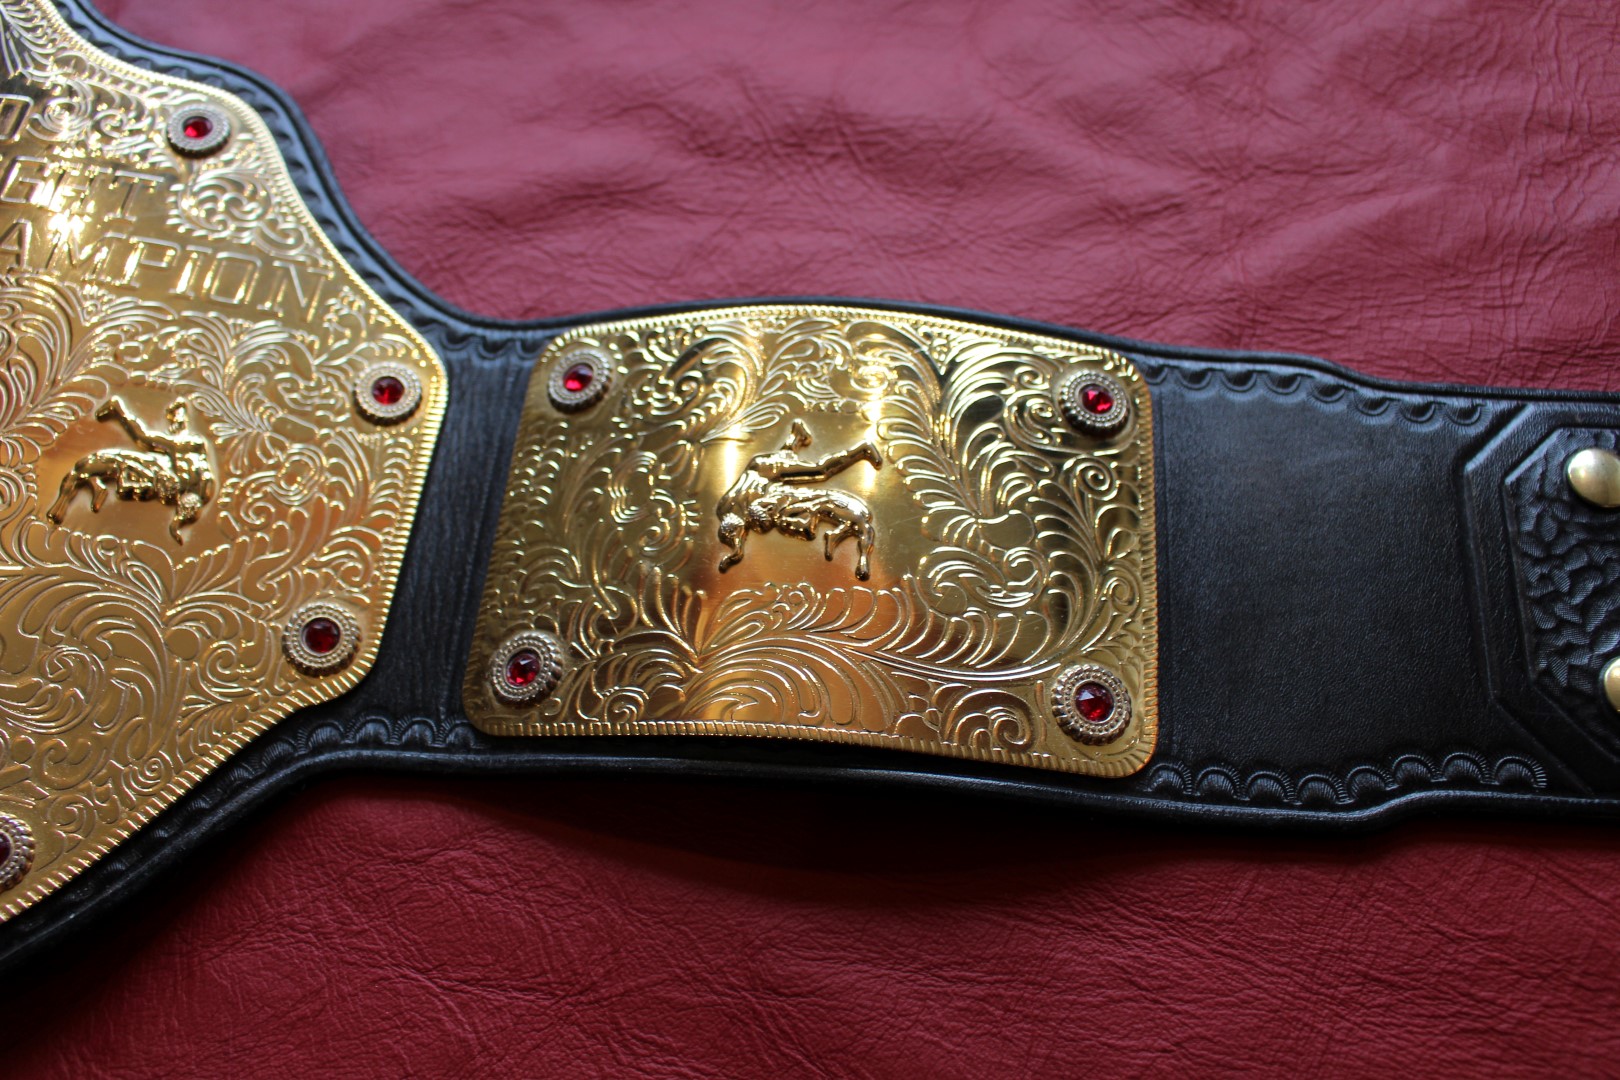 IMG_3912 (Large) – Paul Martin Championship Belts